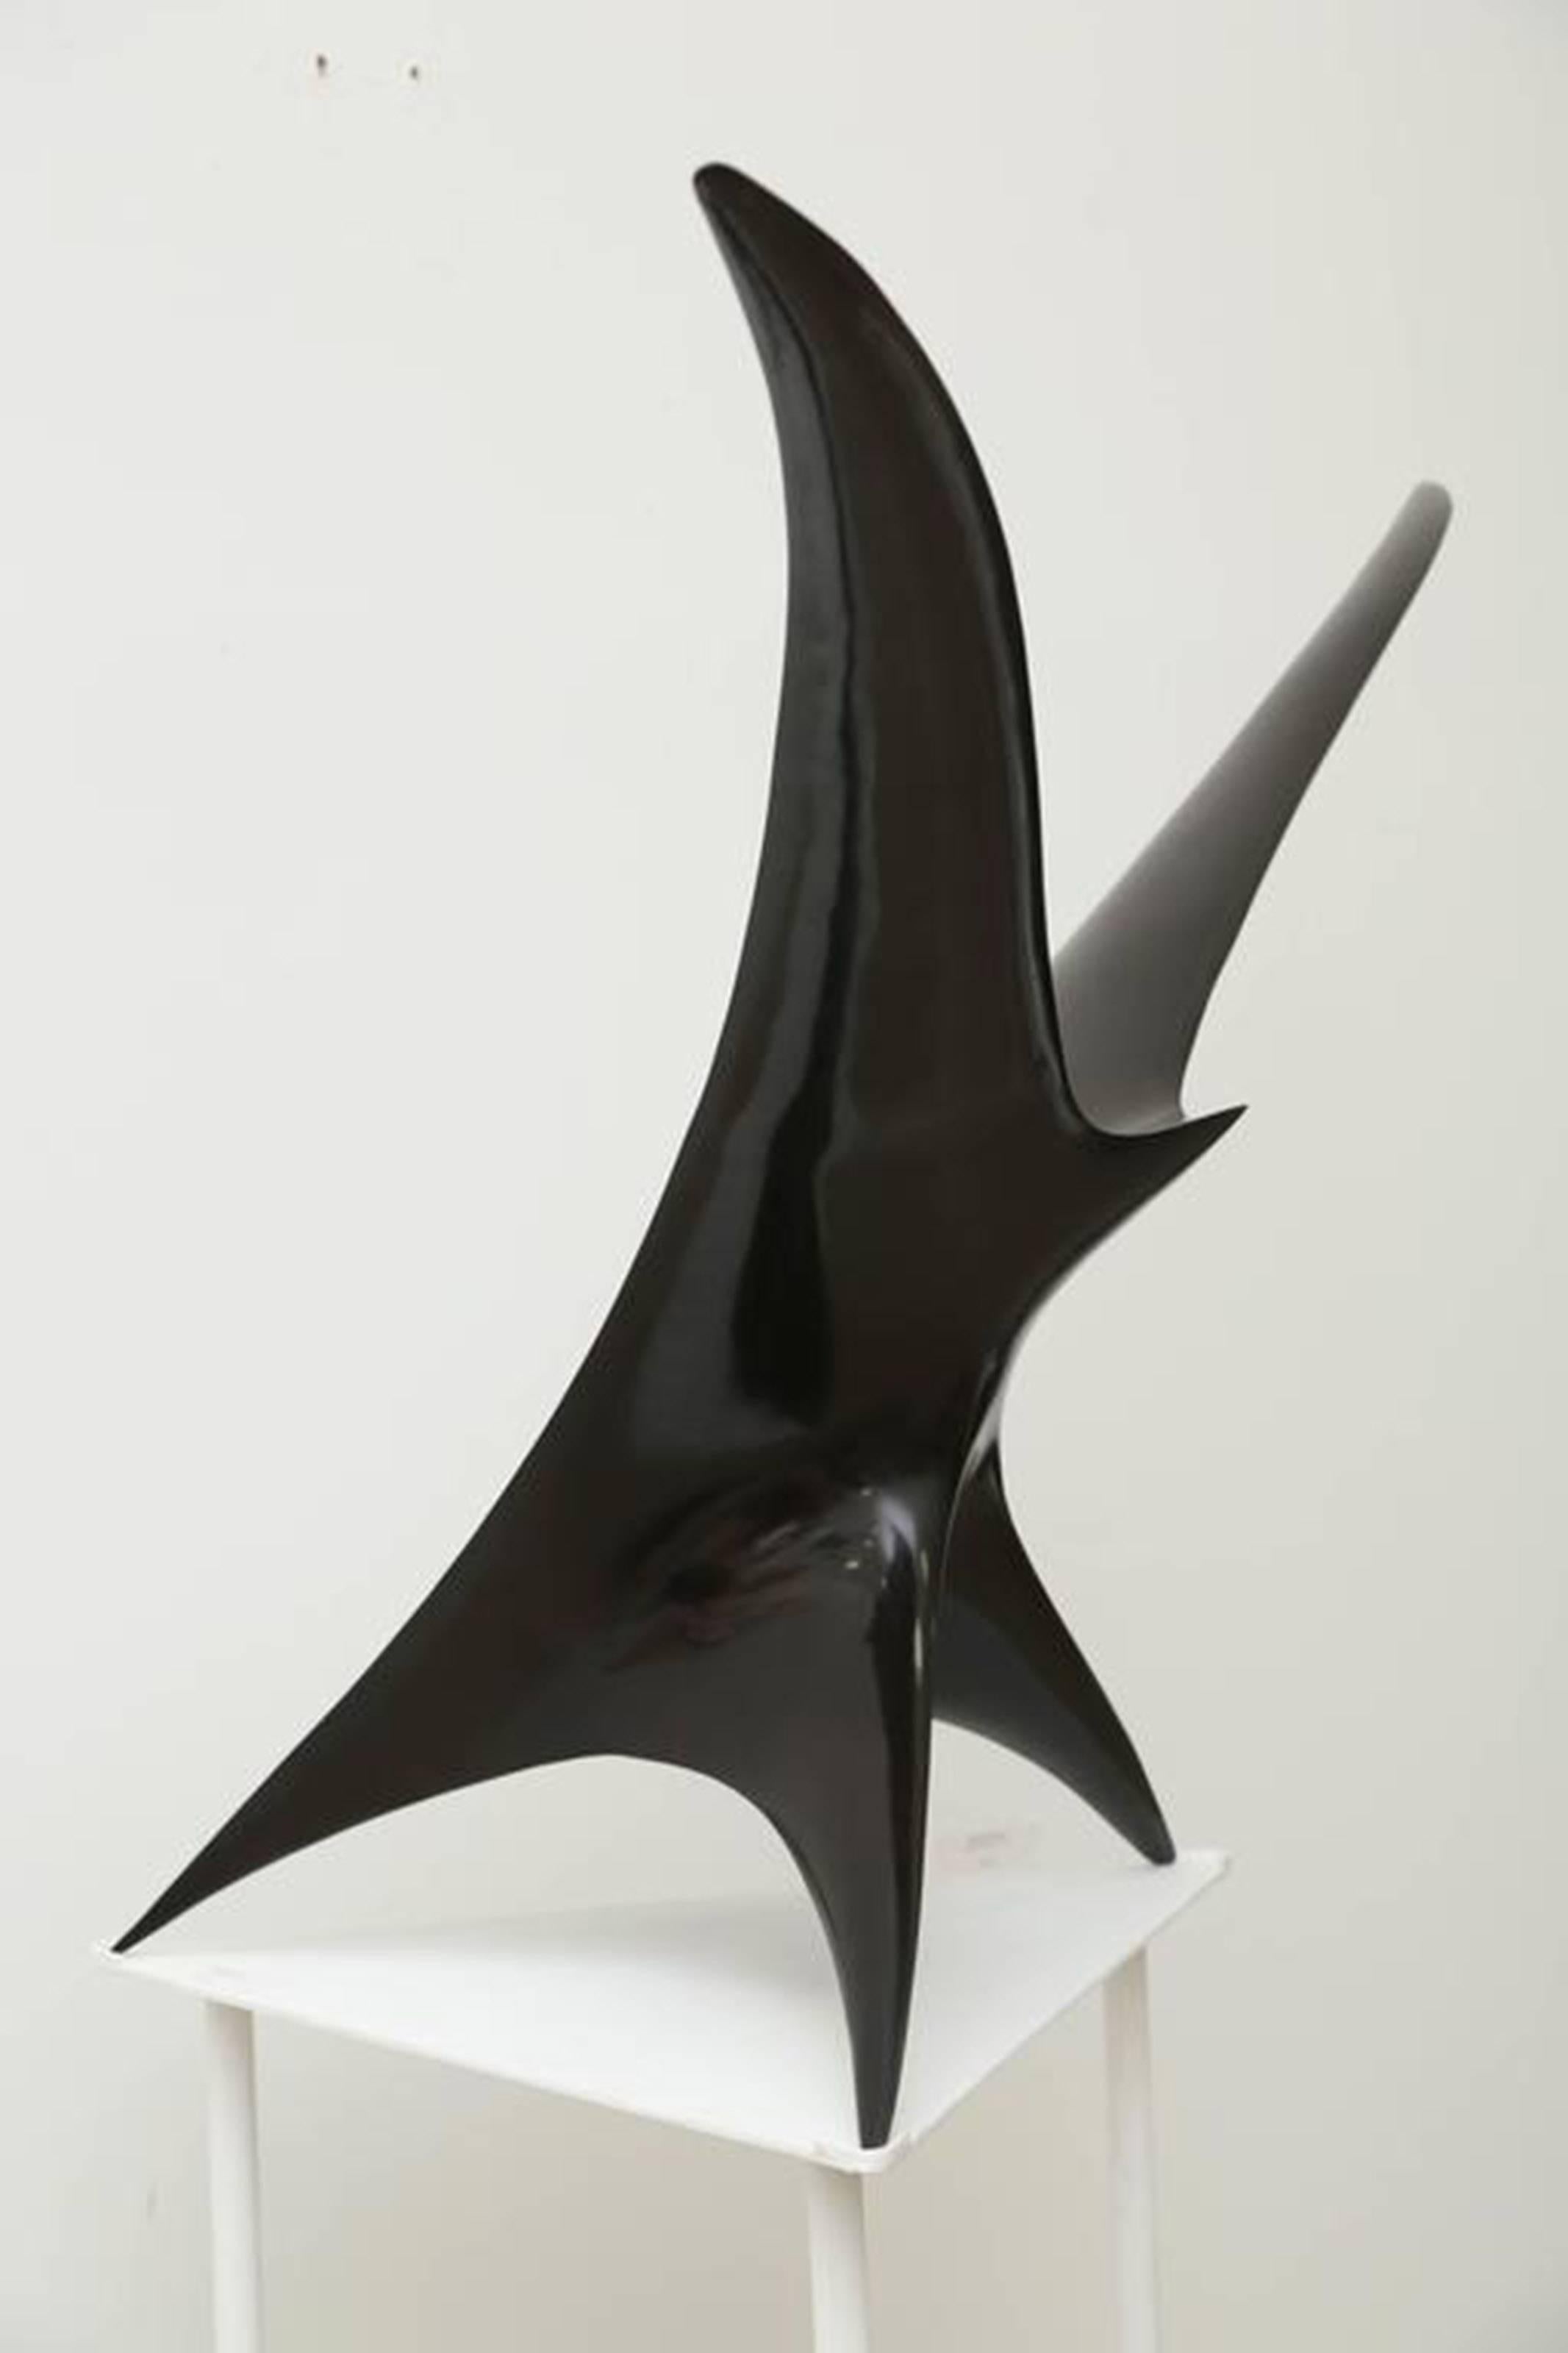 Twin Bird - Sculpture by Patrice Breteau